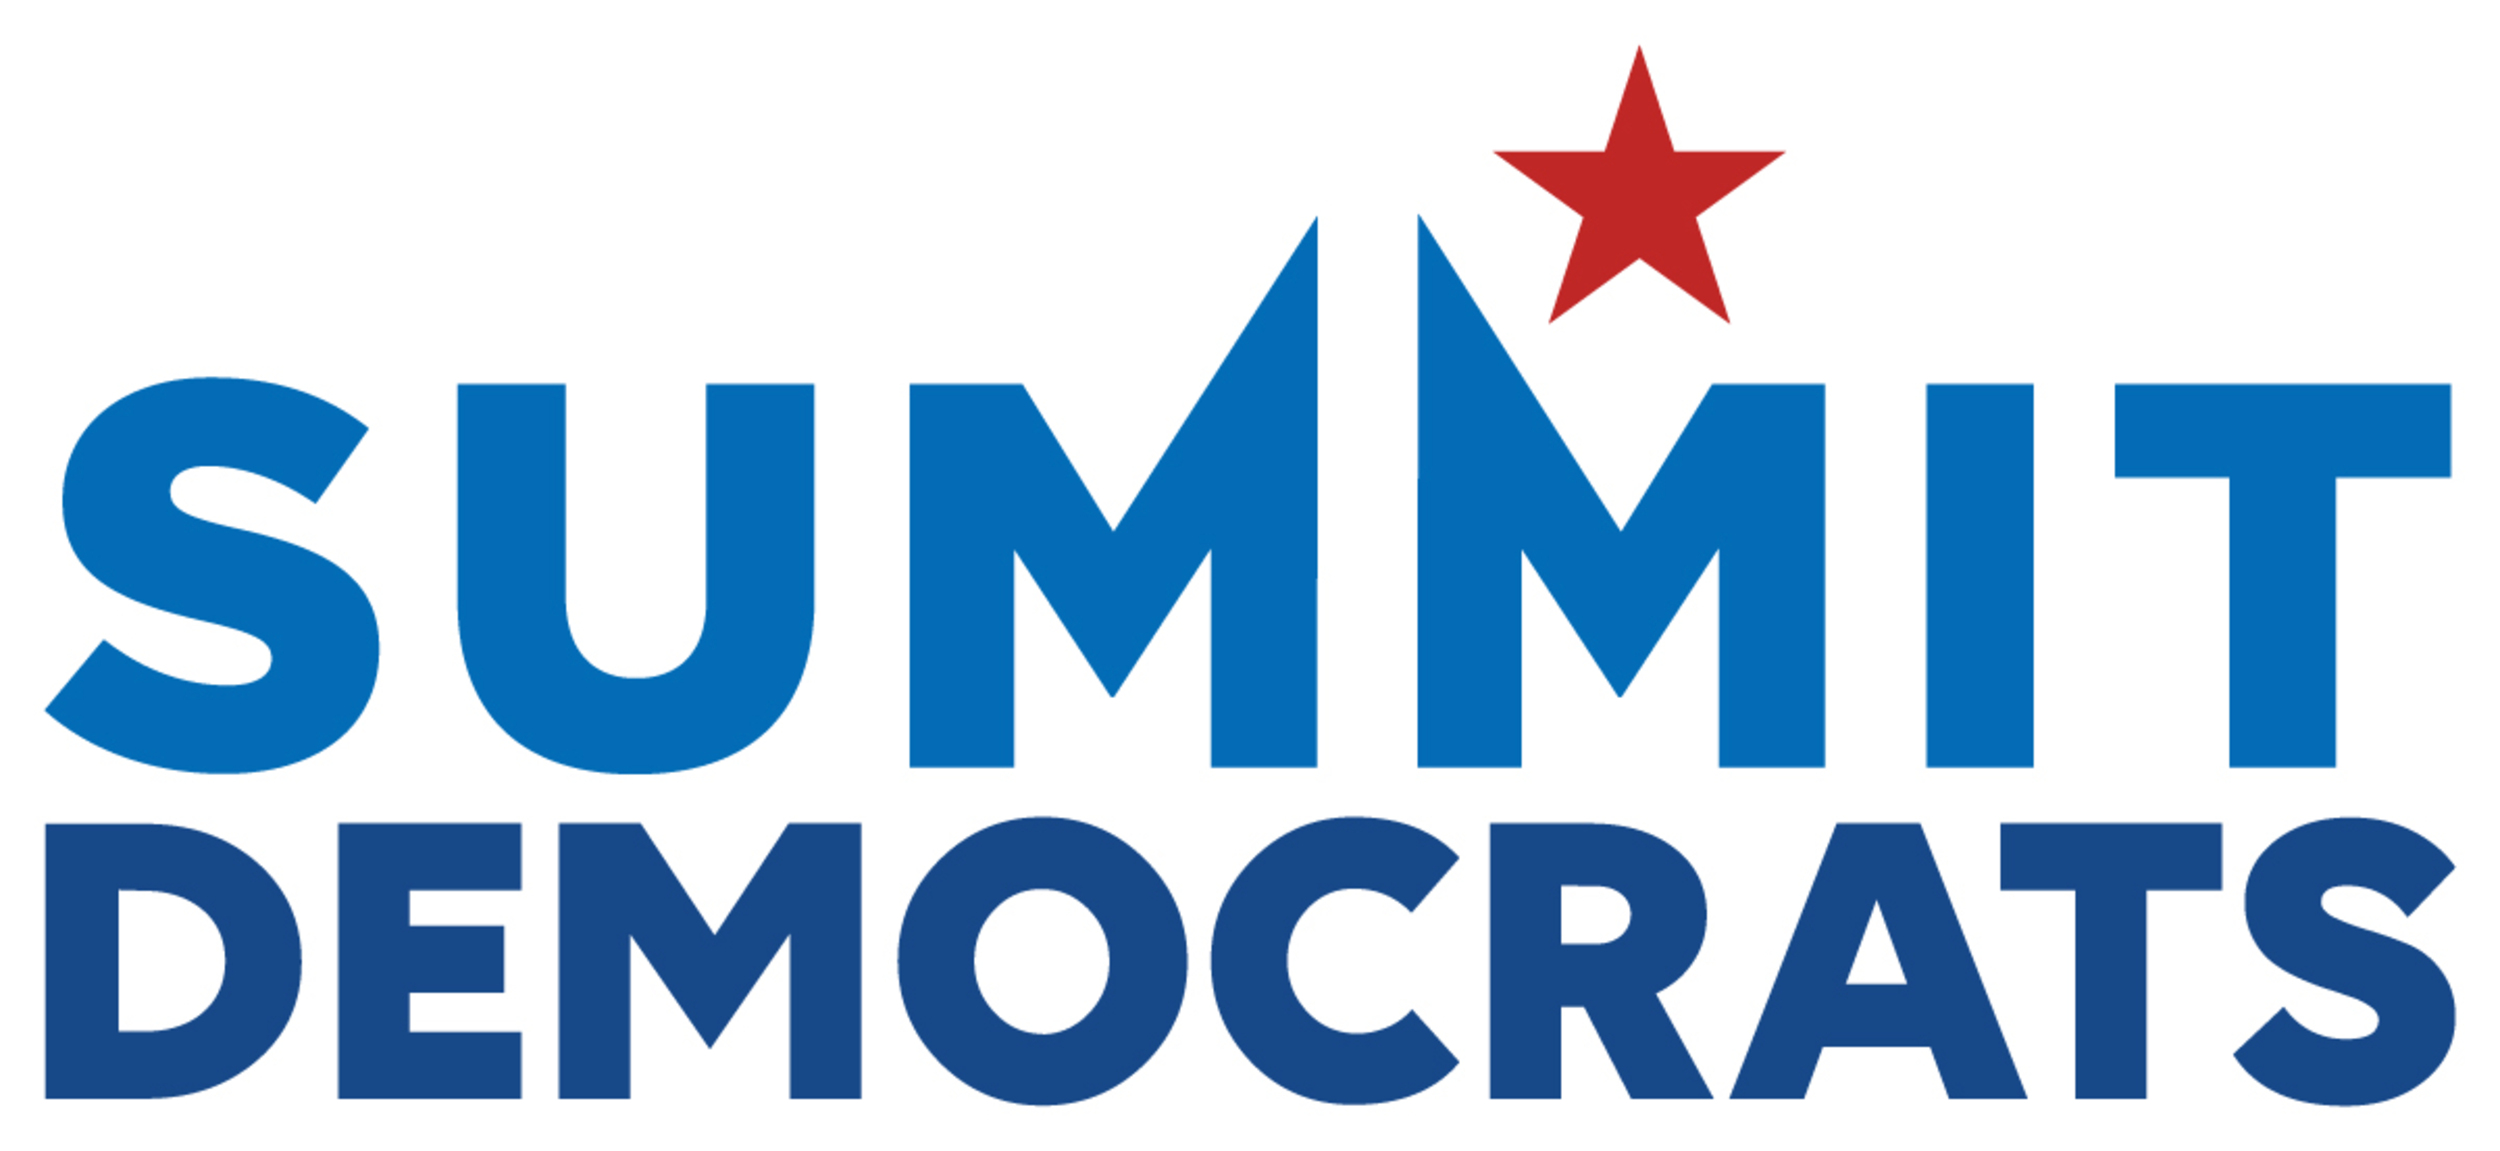 Summit Democrats